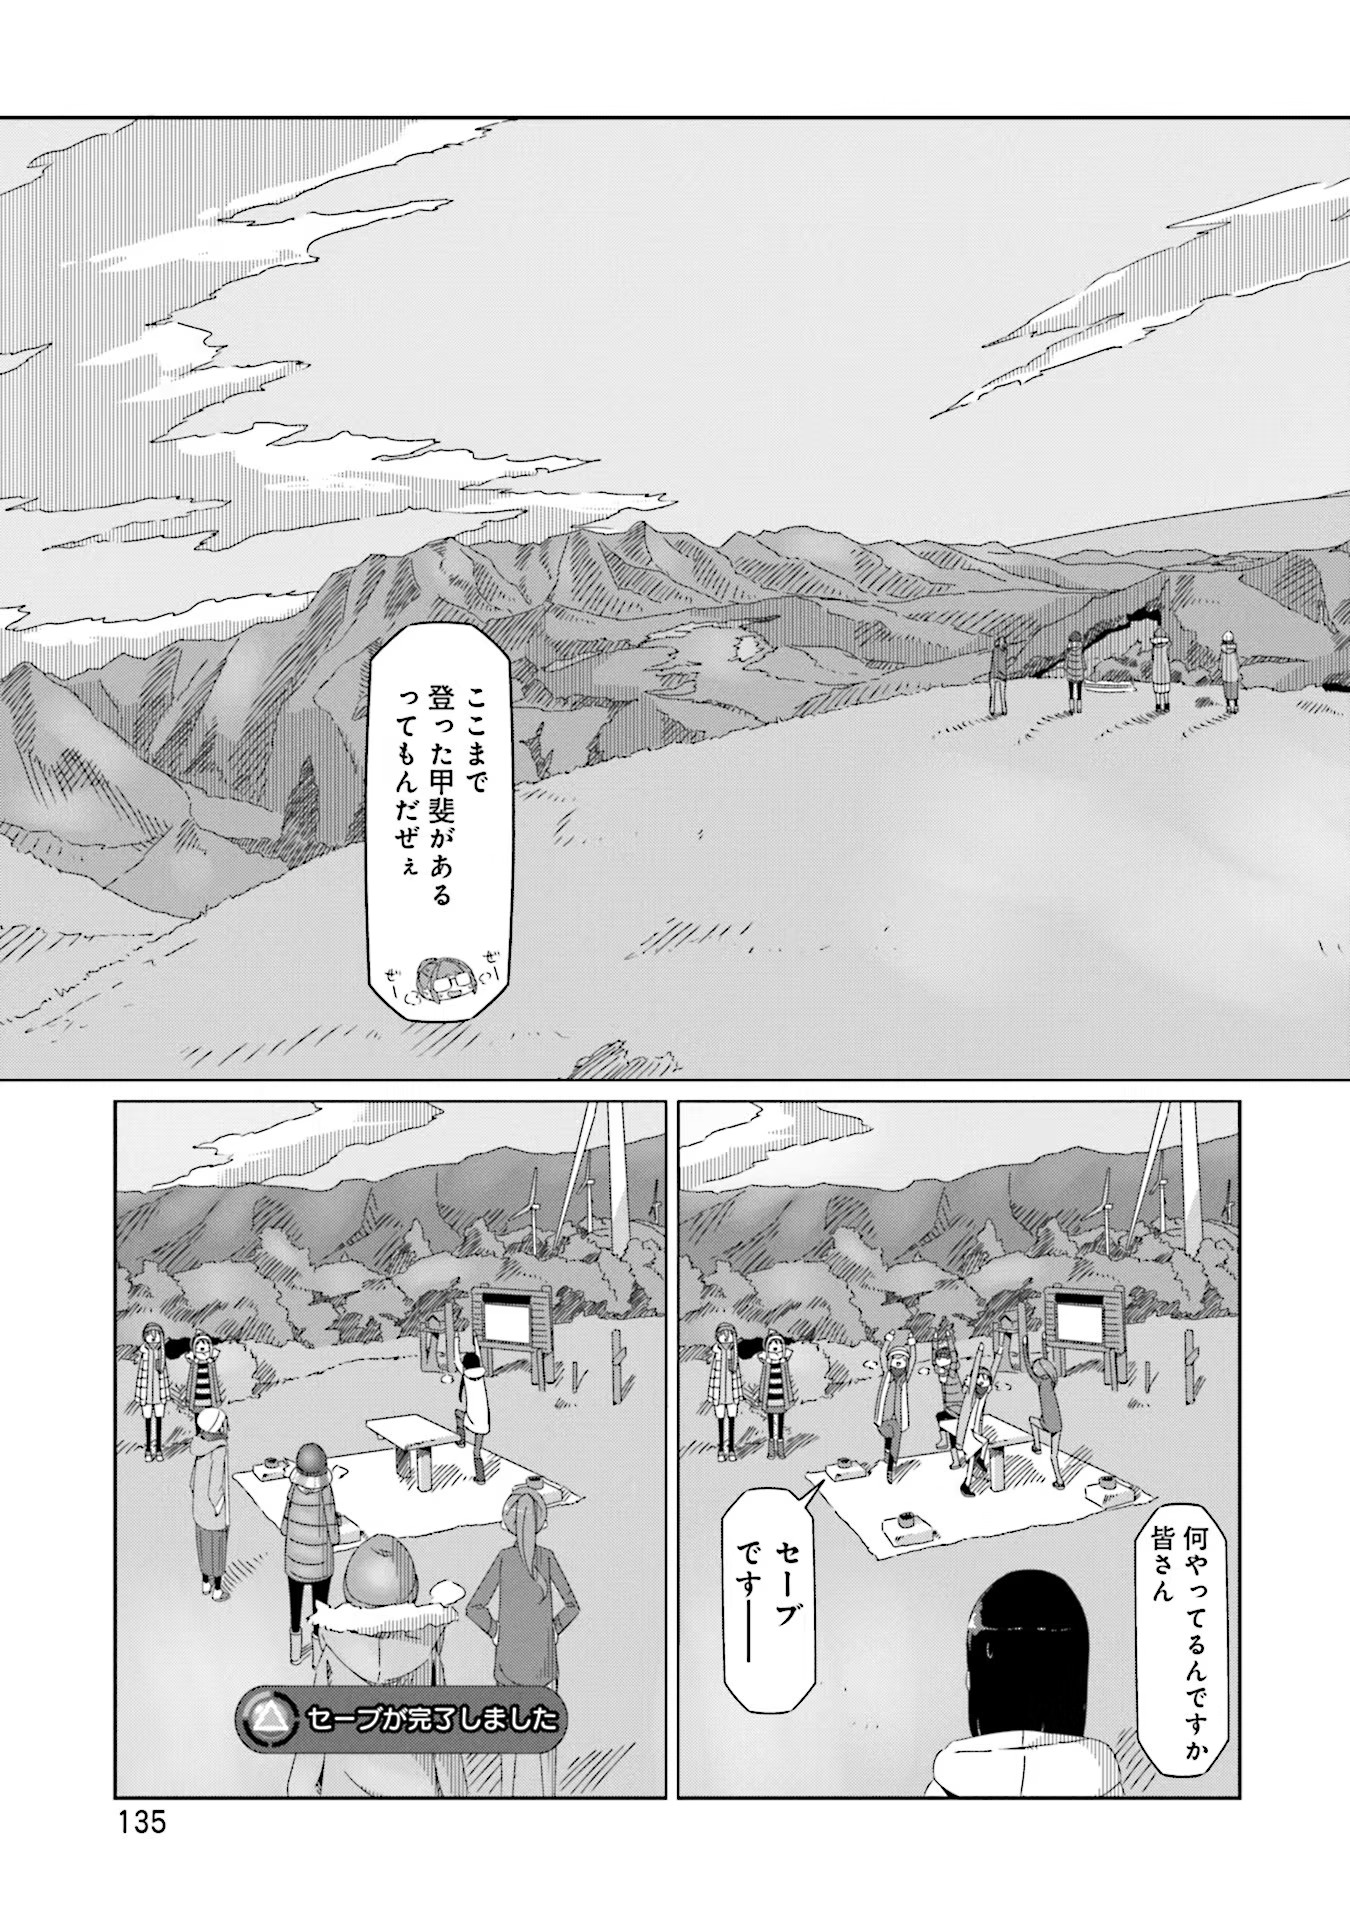 Yuru Camp - Chapter 46 - Page 3